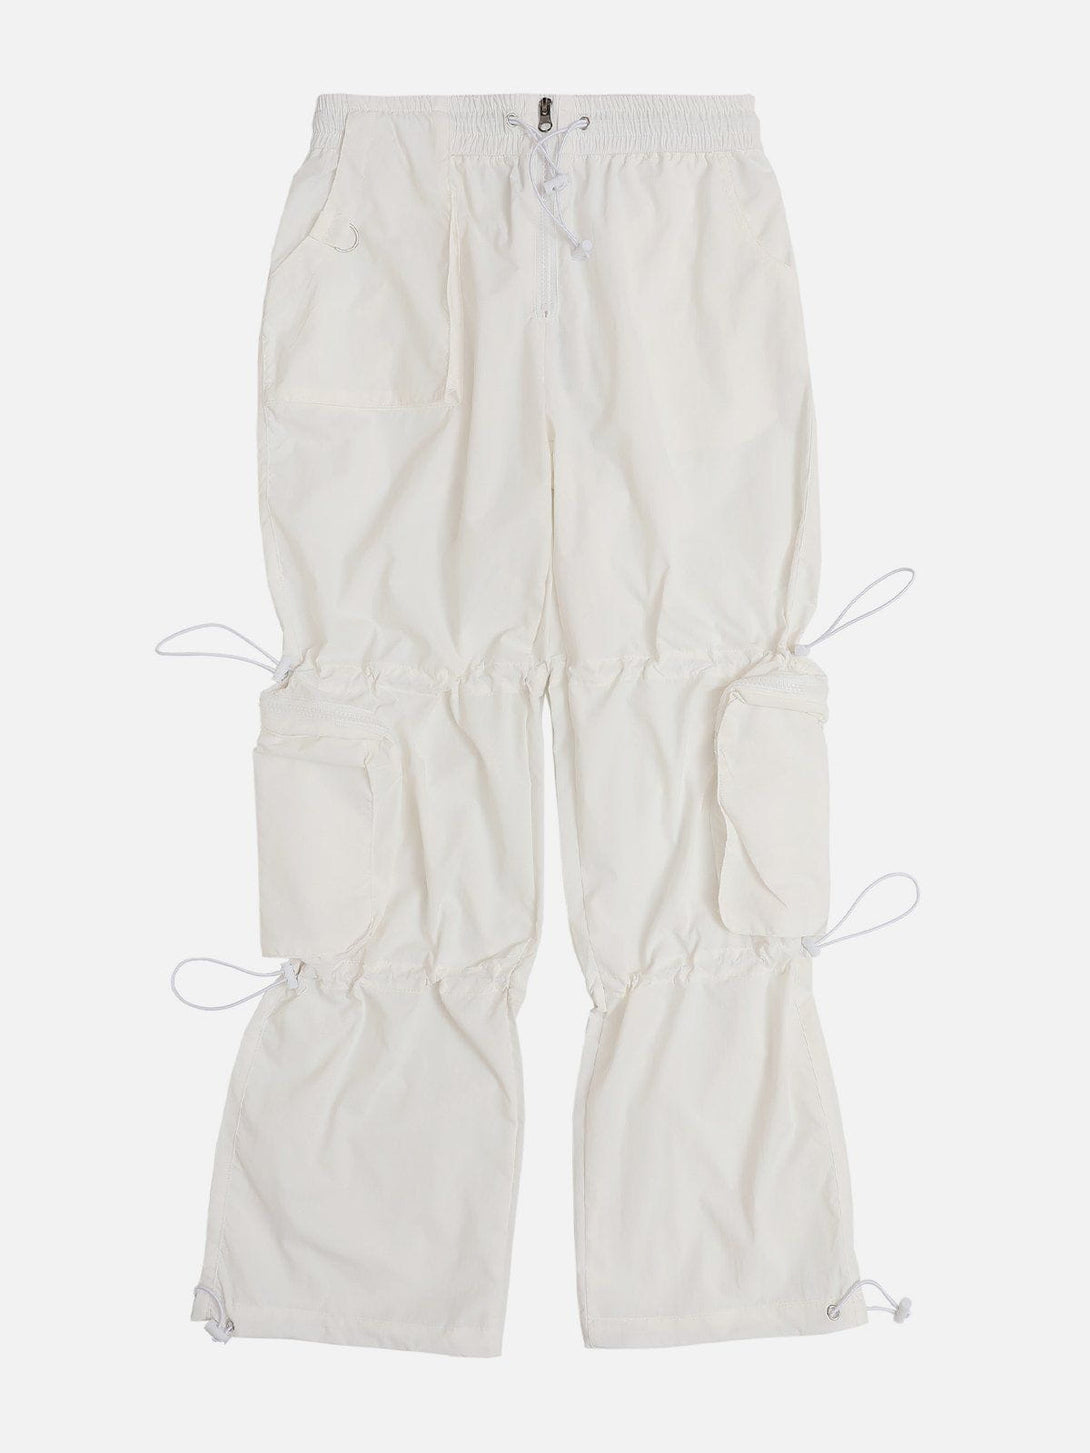 Ellesey - Large Multiple Pockets Drawstring Decoration Cargo Pants- Streetwear Fashion - ellesey.com